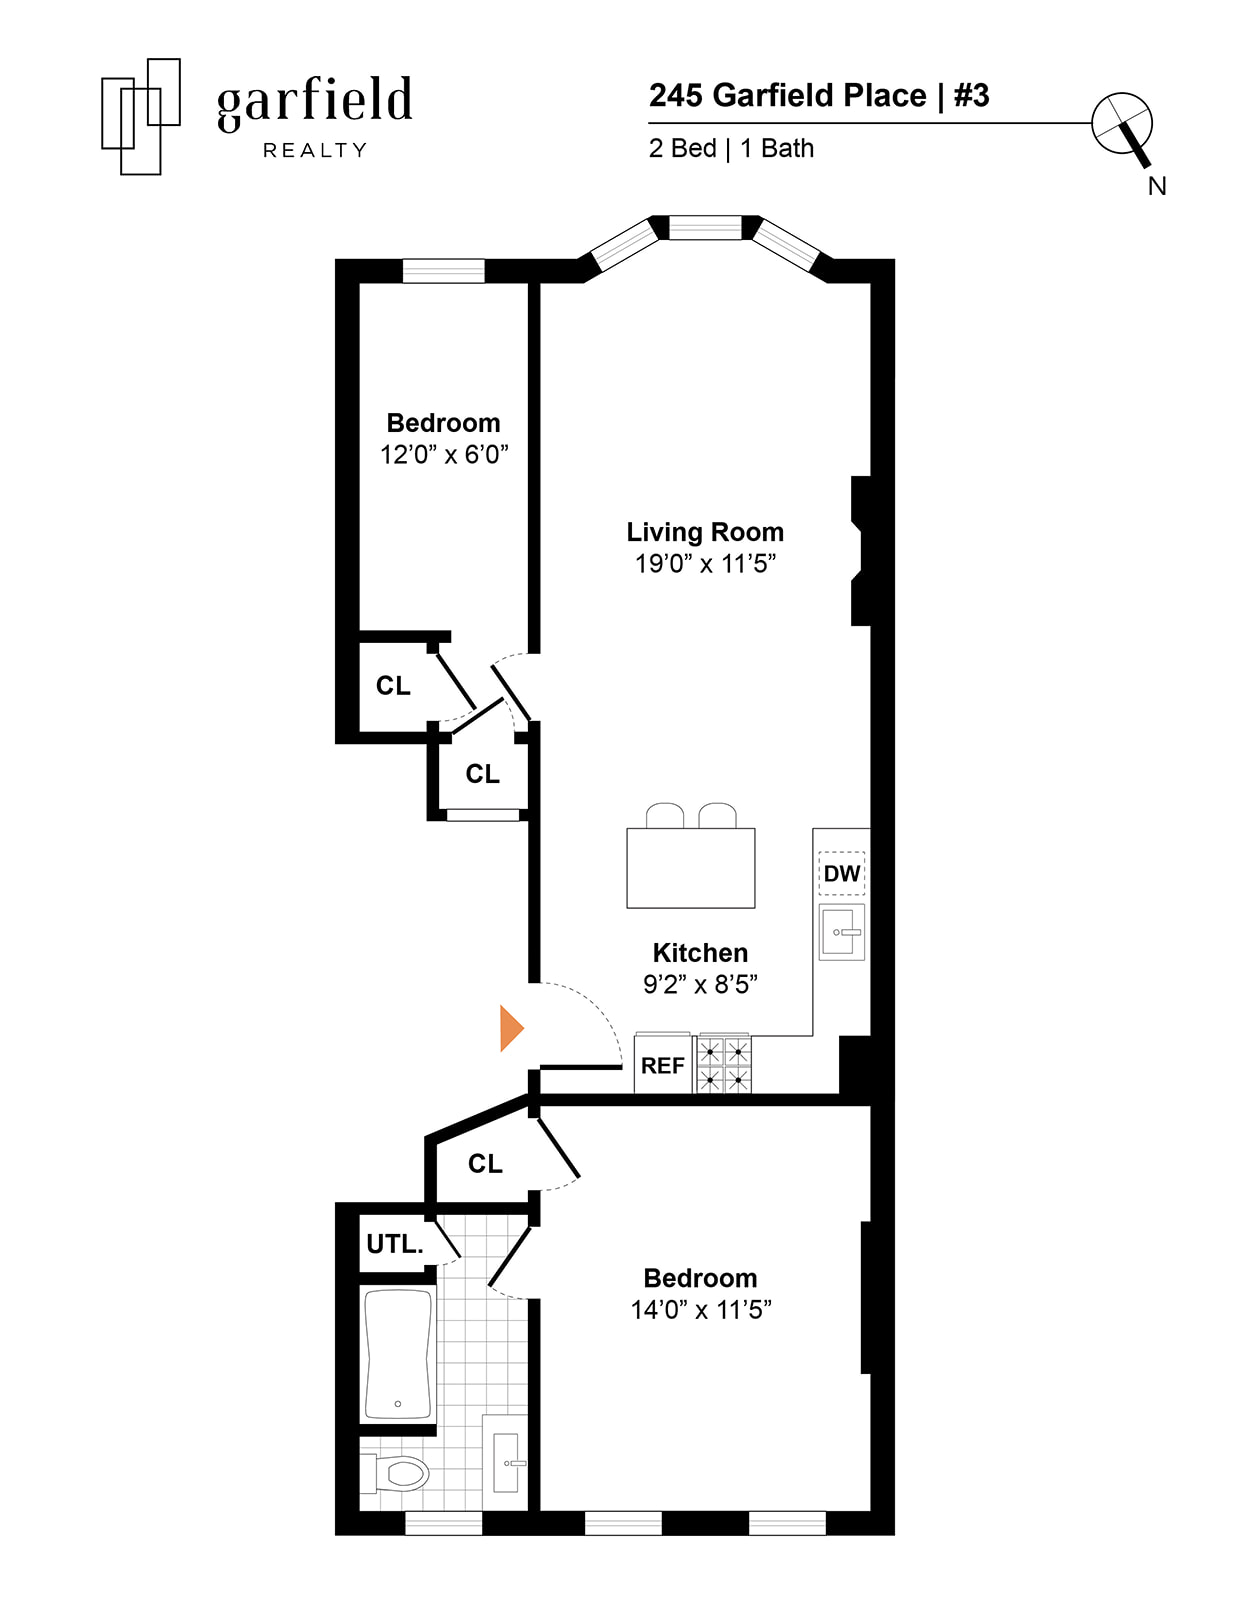 Floorplan of 245 Garfield Pl